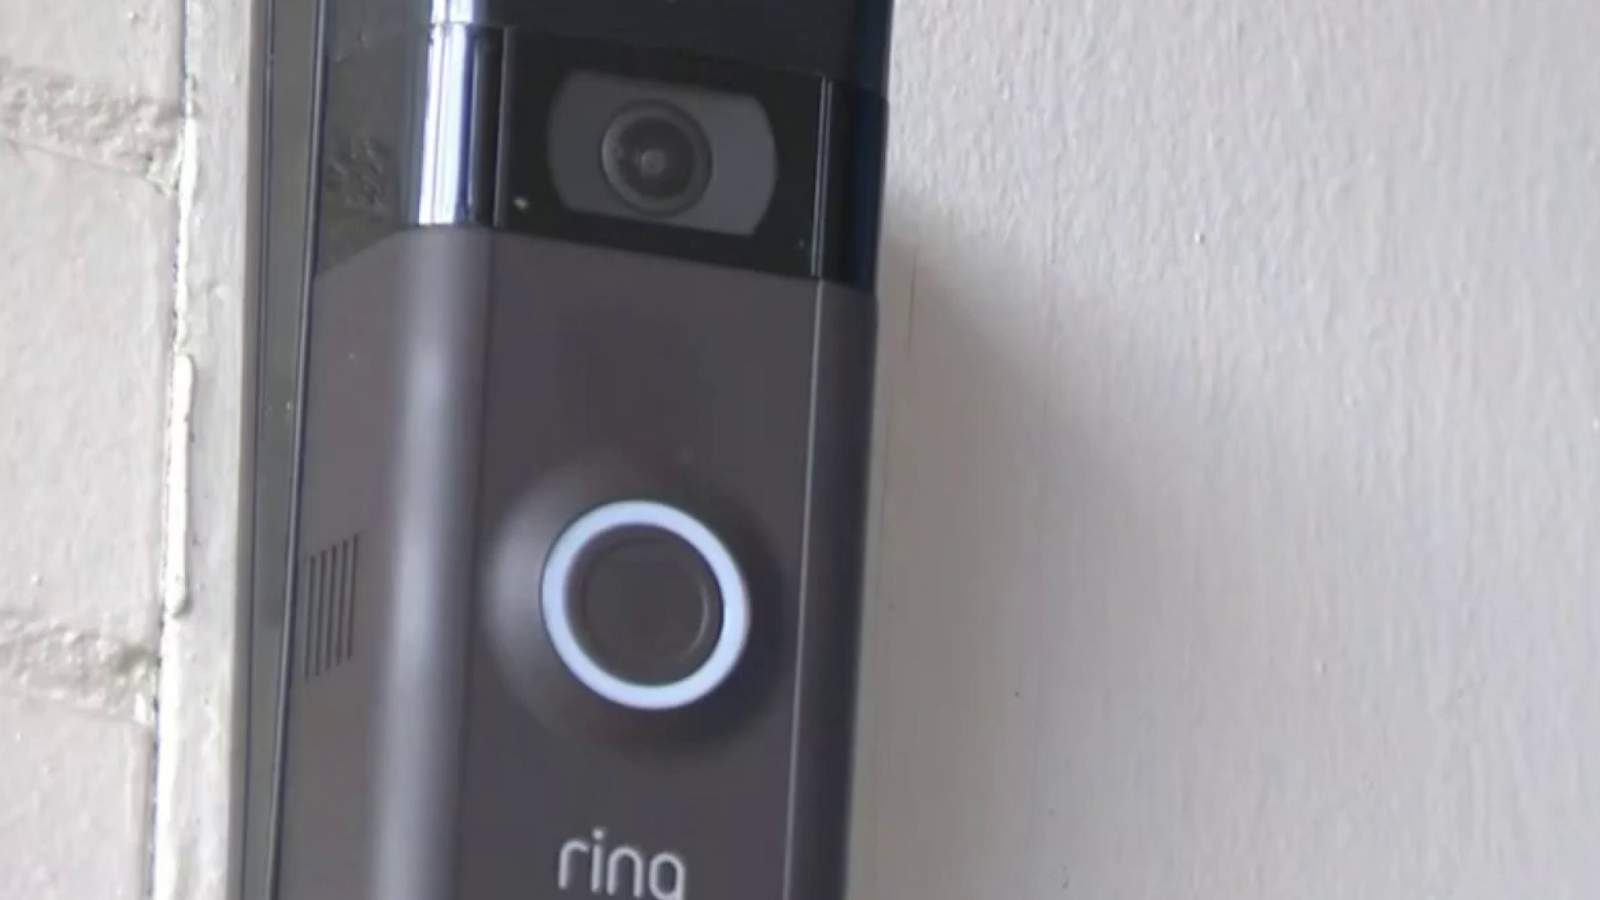 Ring recalls second generation doorbells over potential fire risk